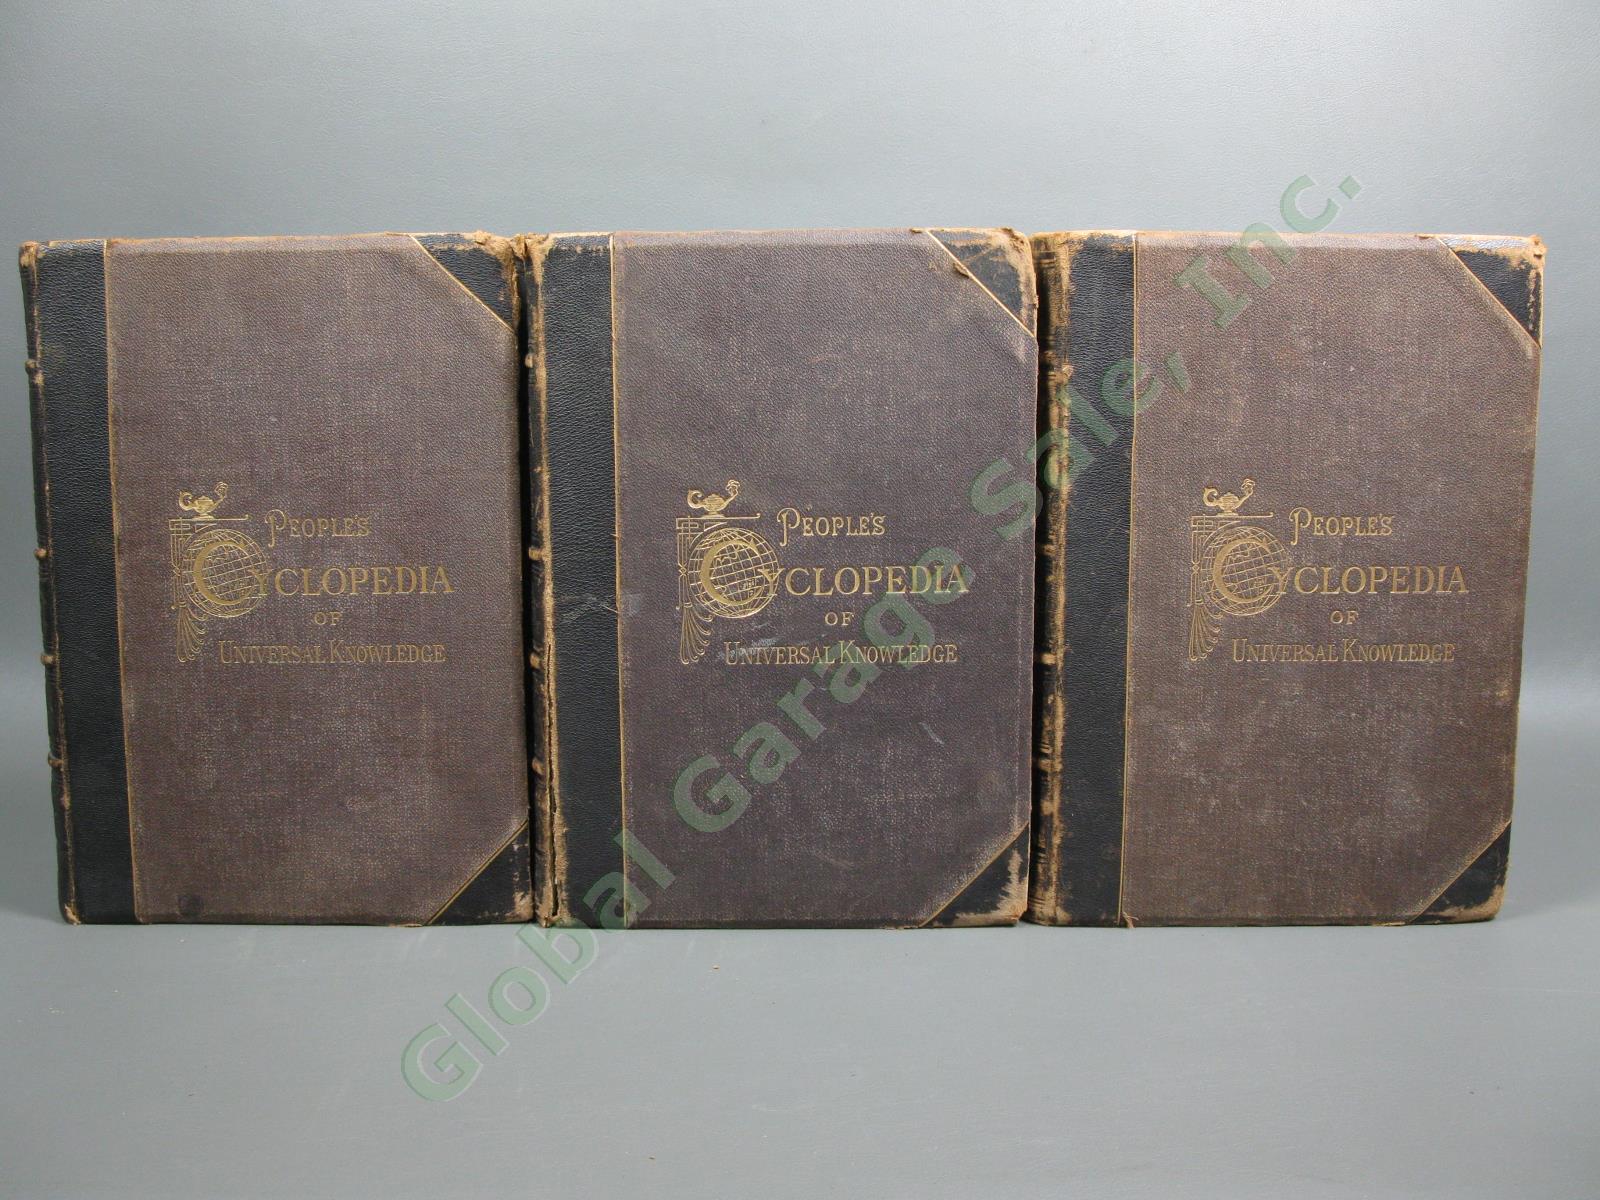 1883 Peoples Cyclopedia Universal Knowledge Vol 1-3 Illustrated Encyclopedia Set 2